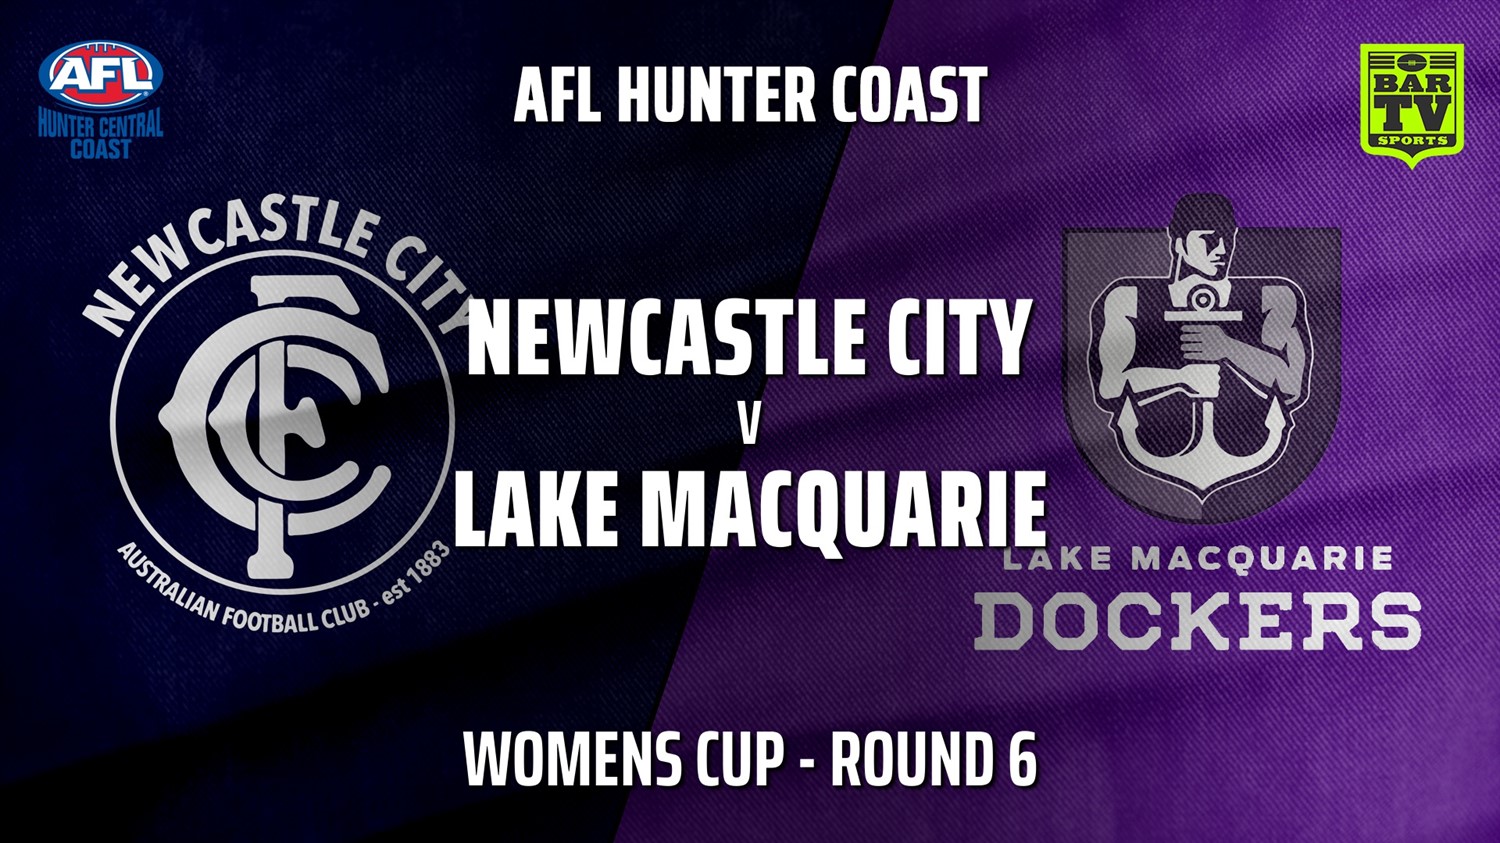 210515-AFL HCC Round 6 - Womens Cup - Newcastle City  v Lake Macquarie Dockers Slate Image